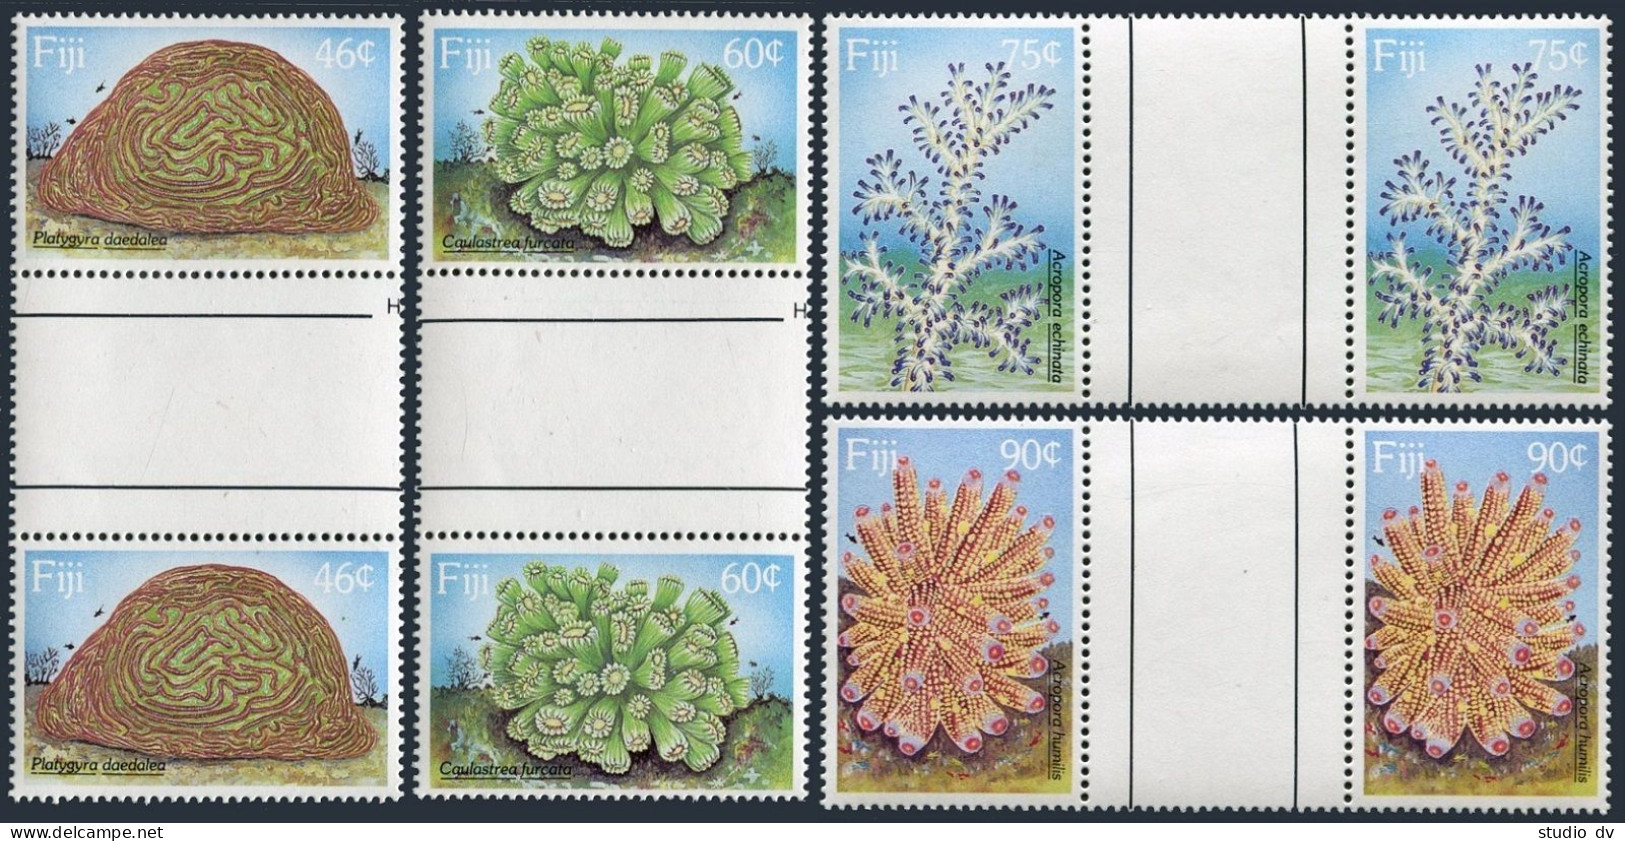 Fiji 607-610 Gutter, MNH. Michel 602-605. Corals 1989. - Fidji (1970-...)